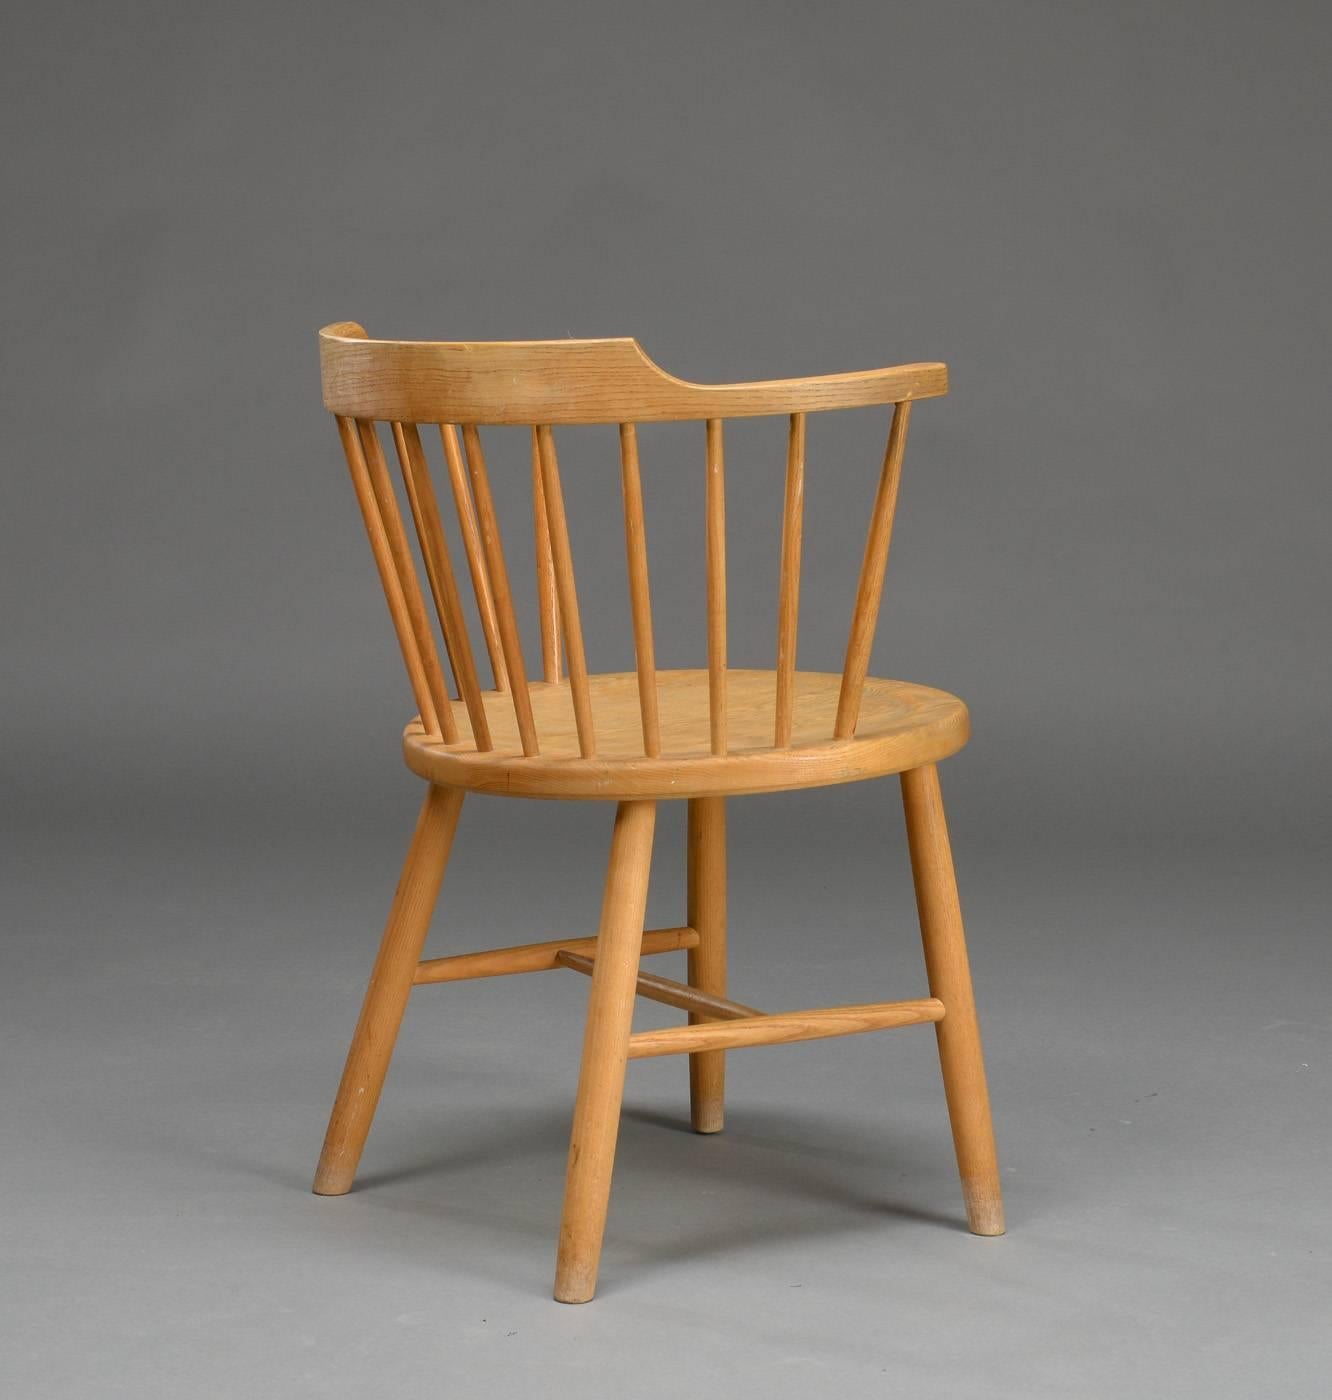 Danish modern solid oak chair designed by Børge Mogensen for Fredericia Stolefabrik. Model 3249.